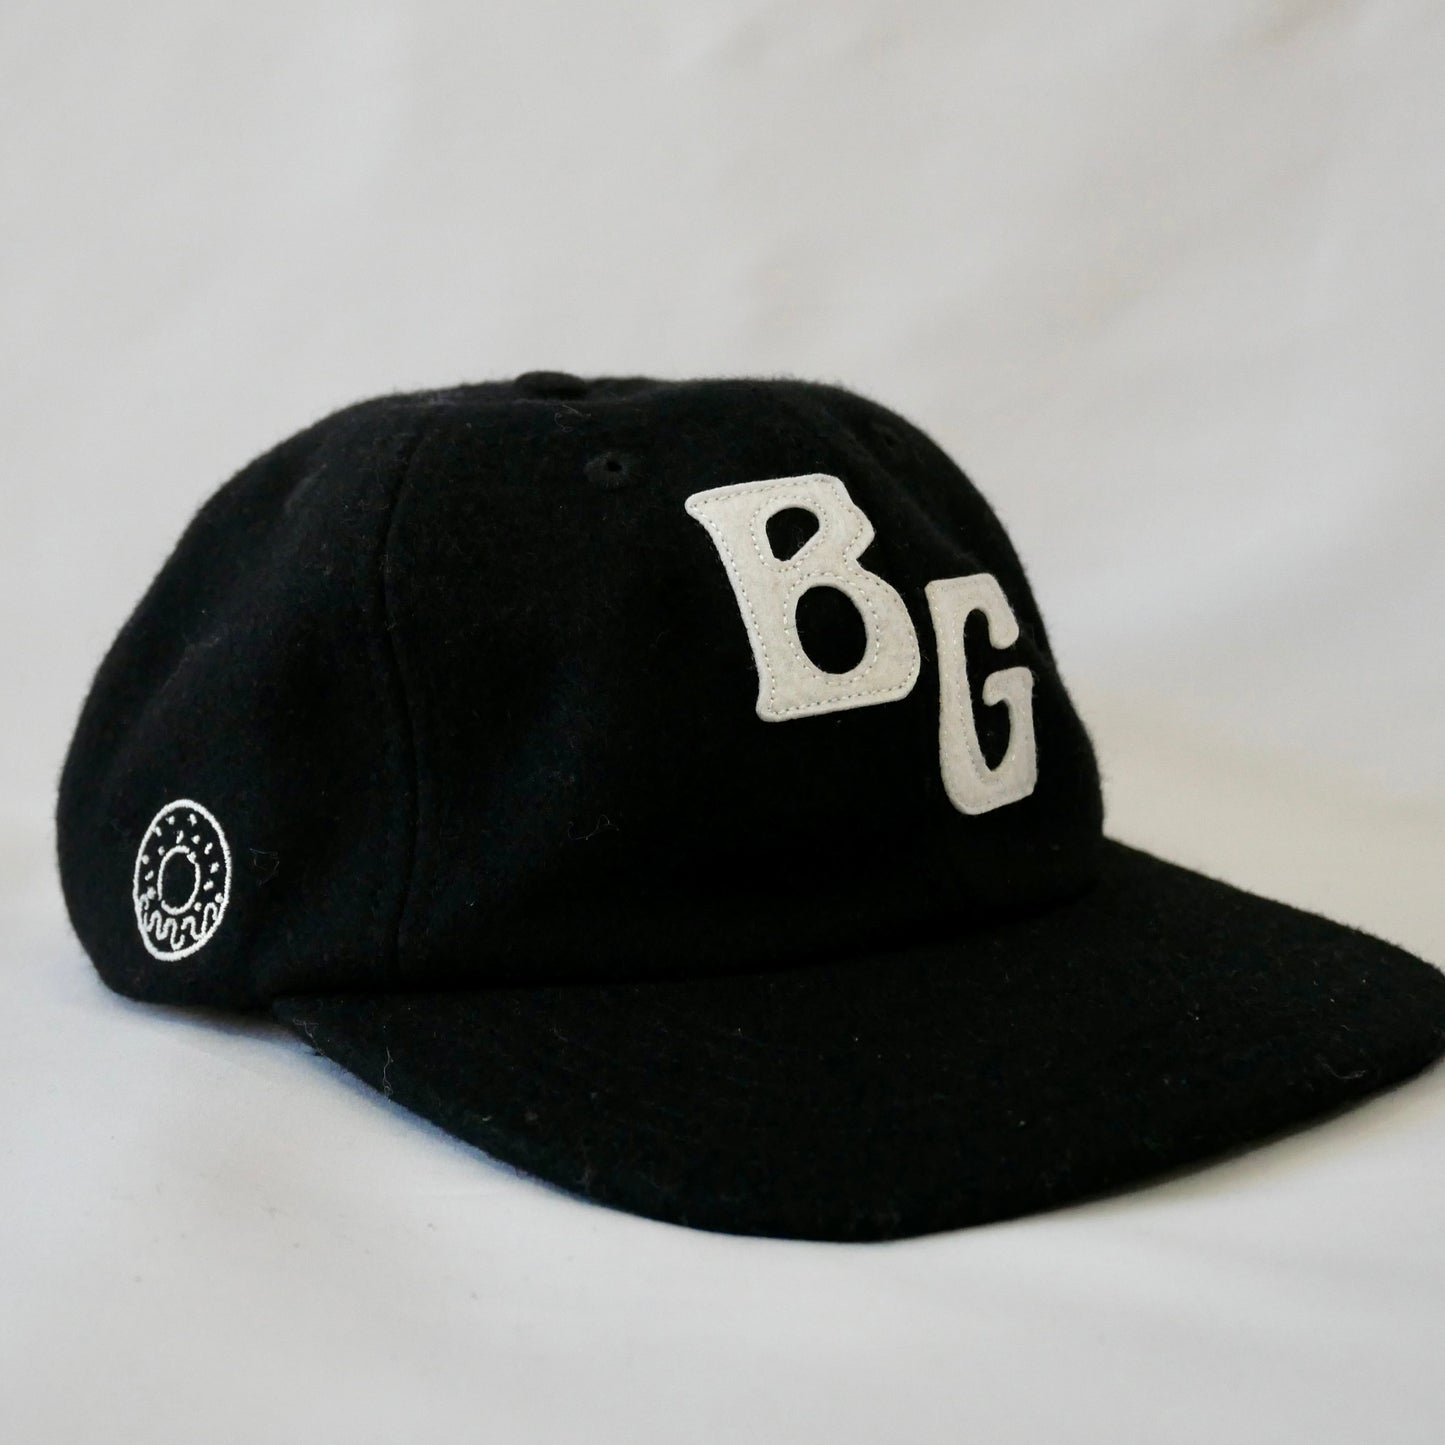 BG Wool Cap - Black